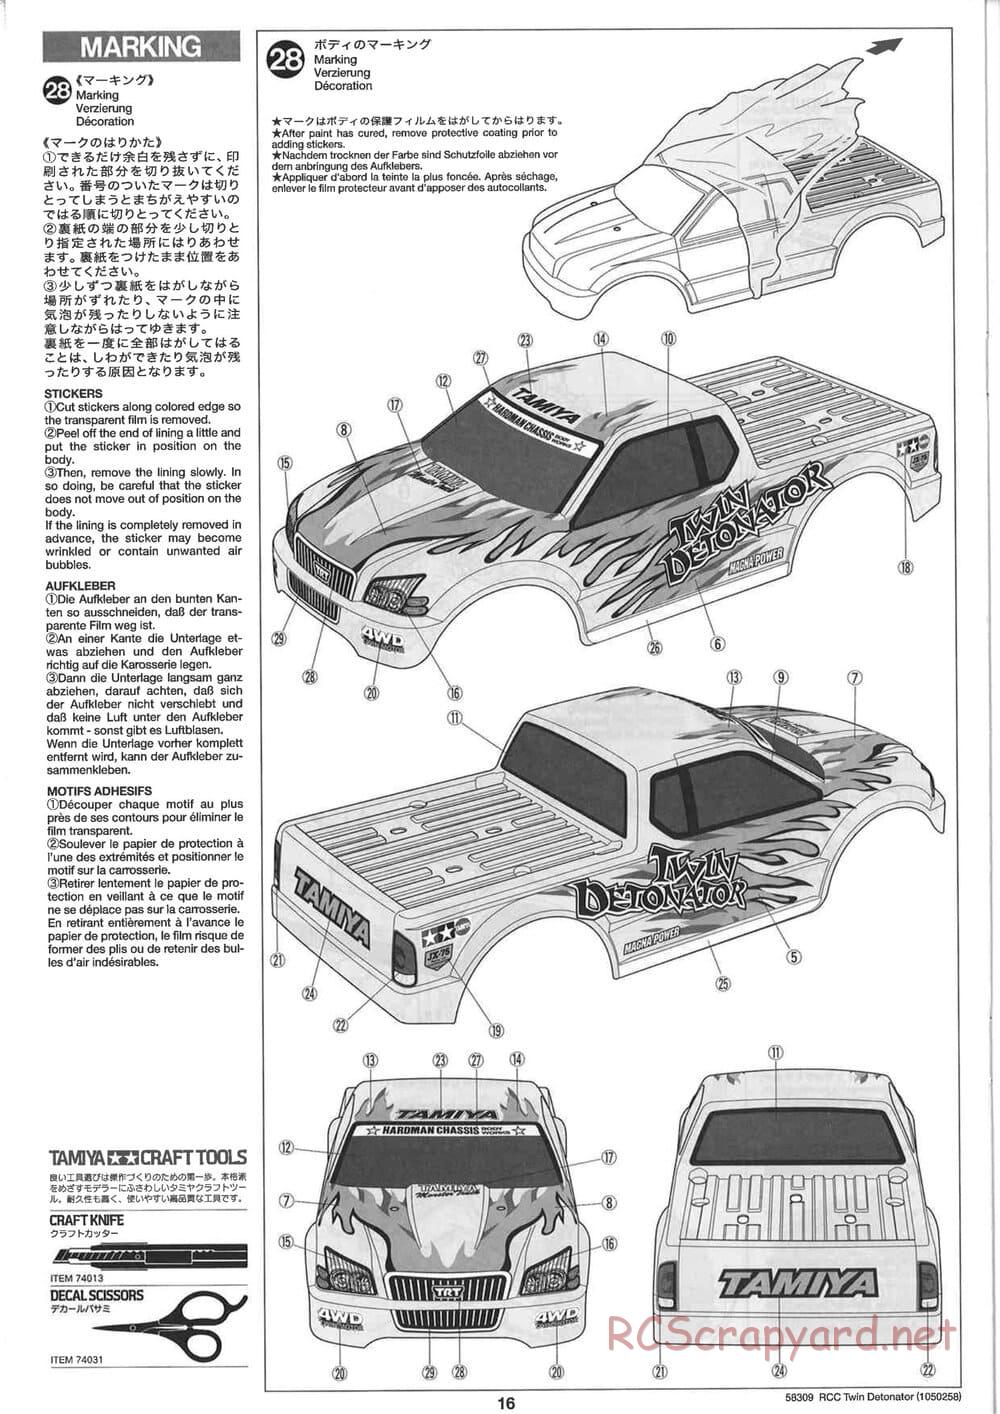 Tamiya - Twin Detonator - WR-01 Chassis - Manual - Page 16